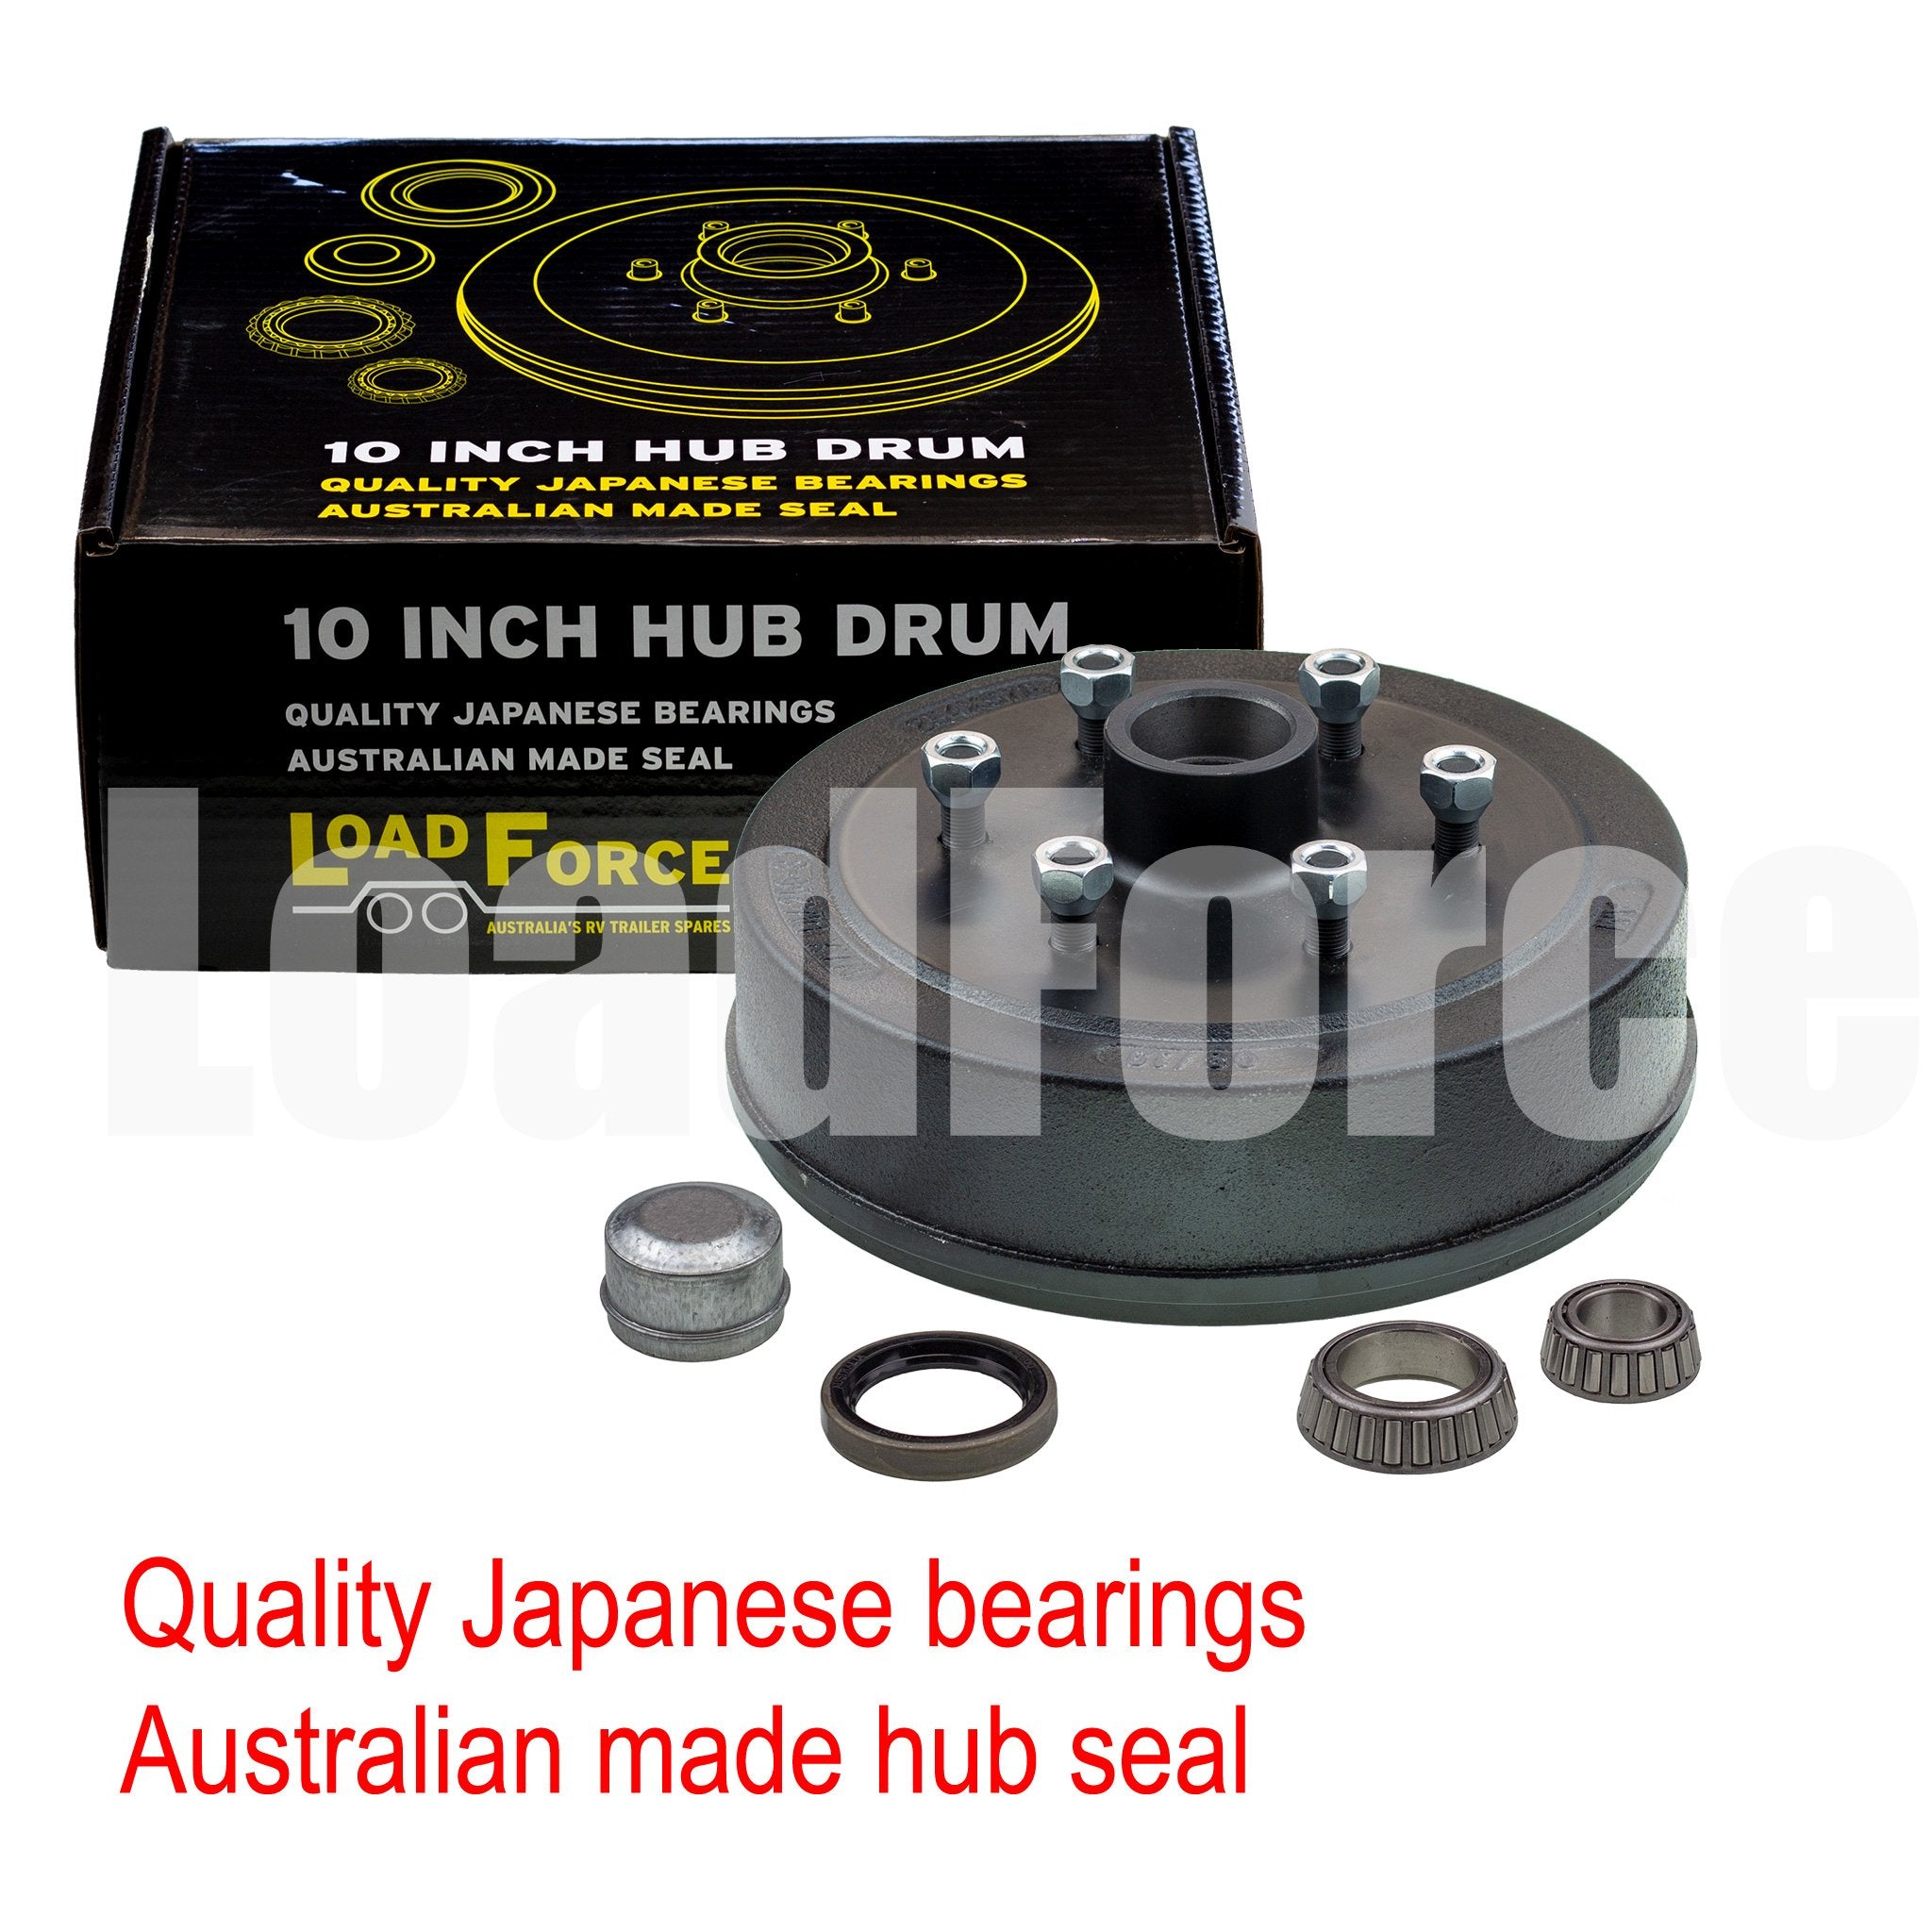 LoadForce Hub drum 10 x 2.25 inch 6 stud with slimline (Ford) bearing